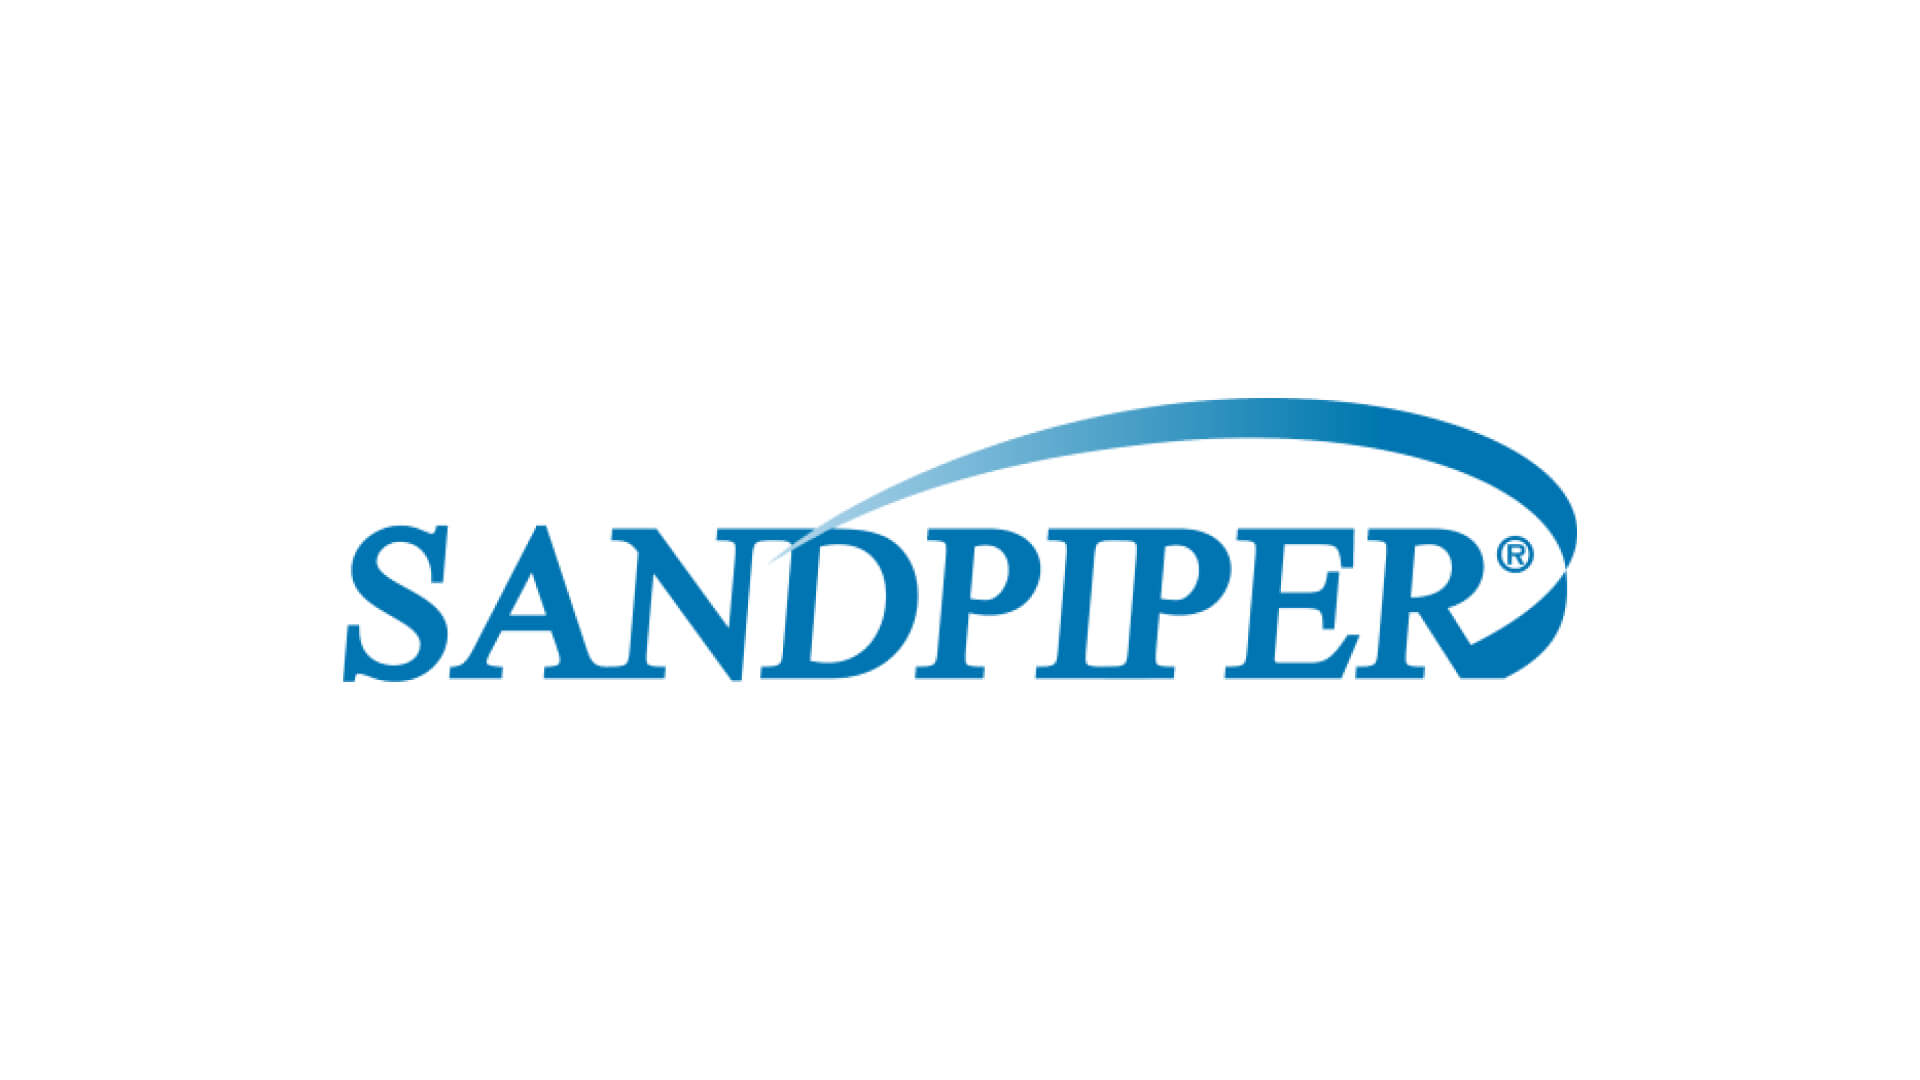 Sandpiper logo in color